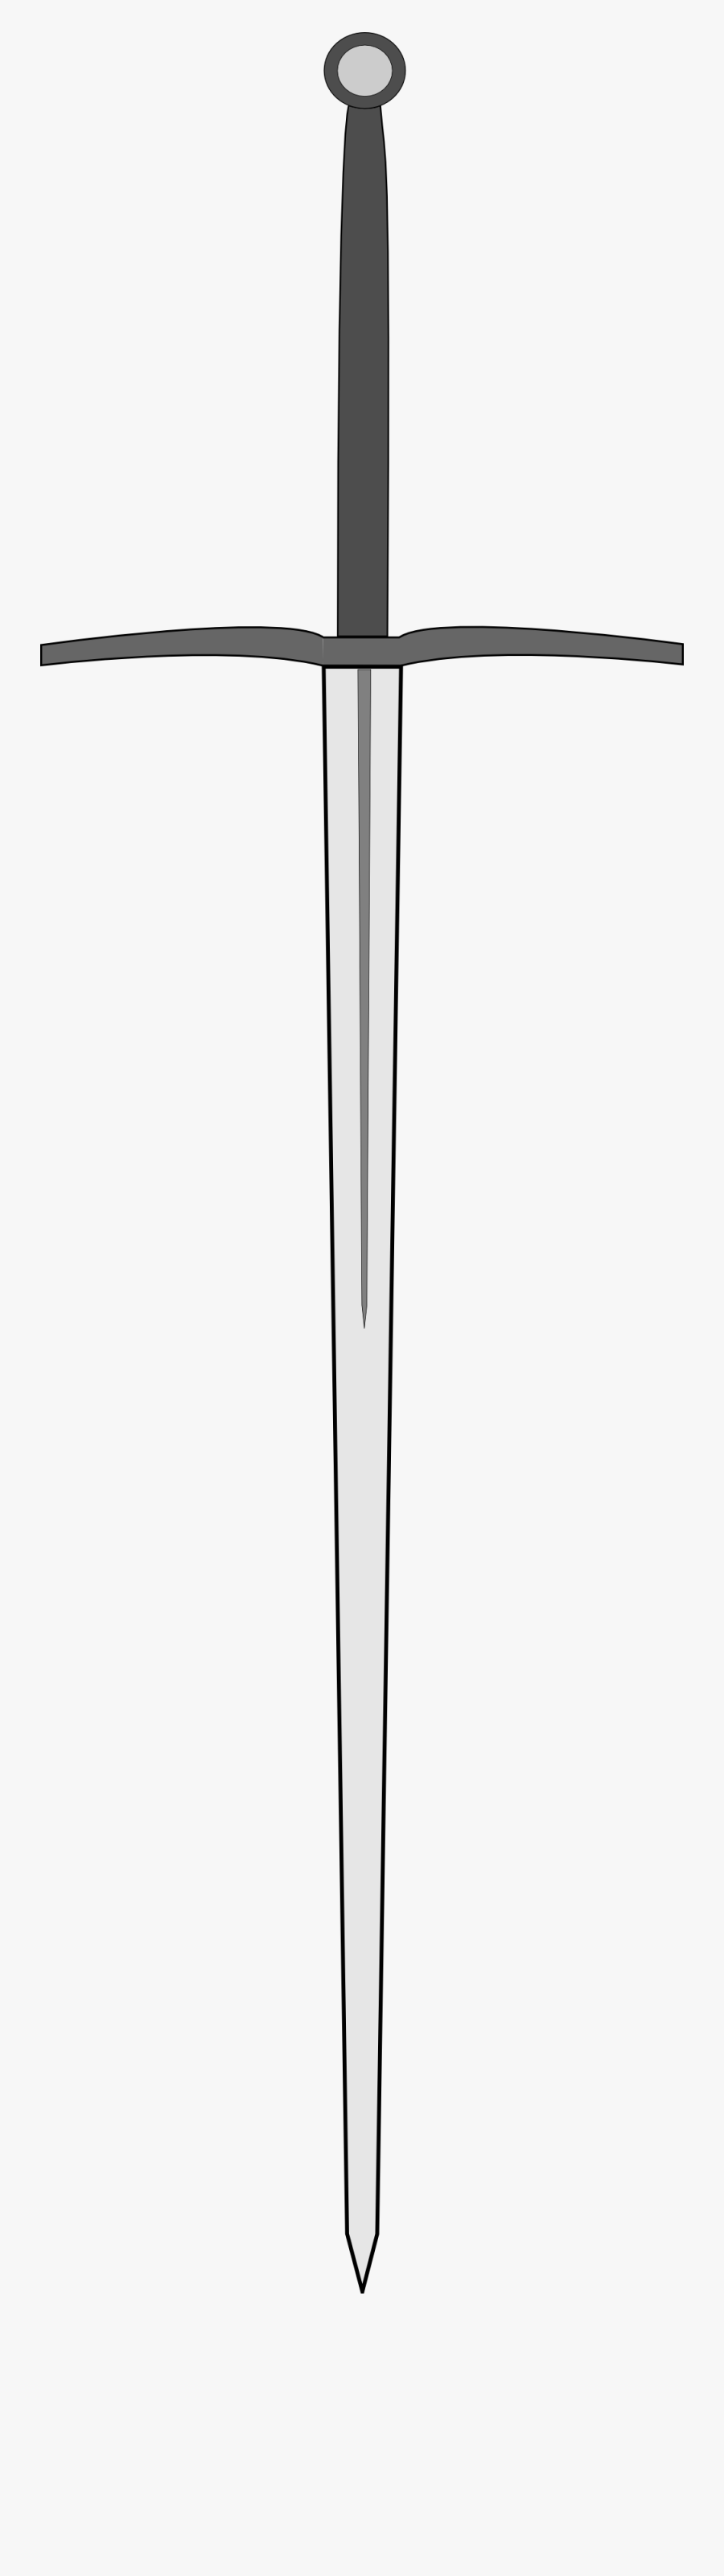 Onlinelabels Clip Art - Two Handed Sword Png, Transparent Clipart